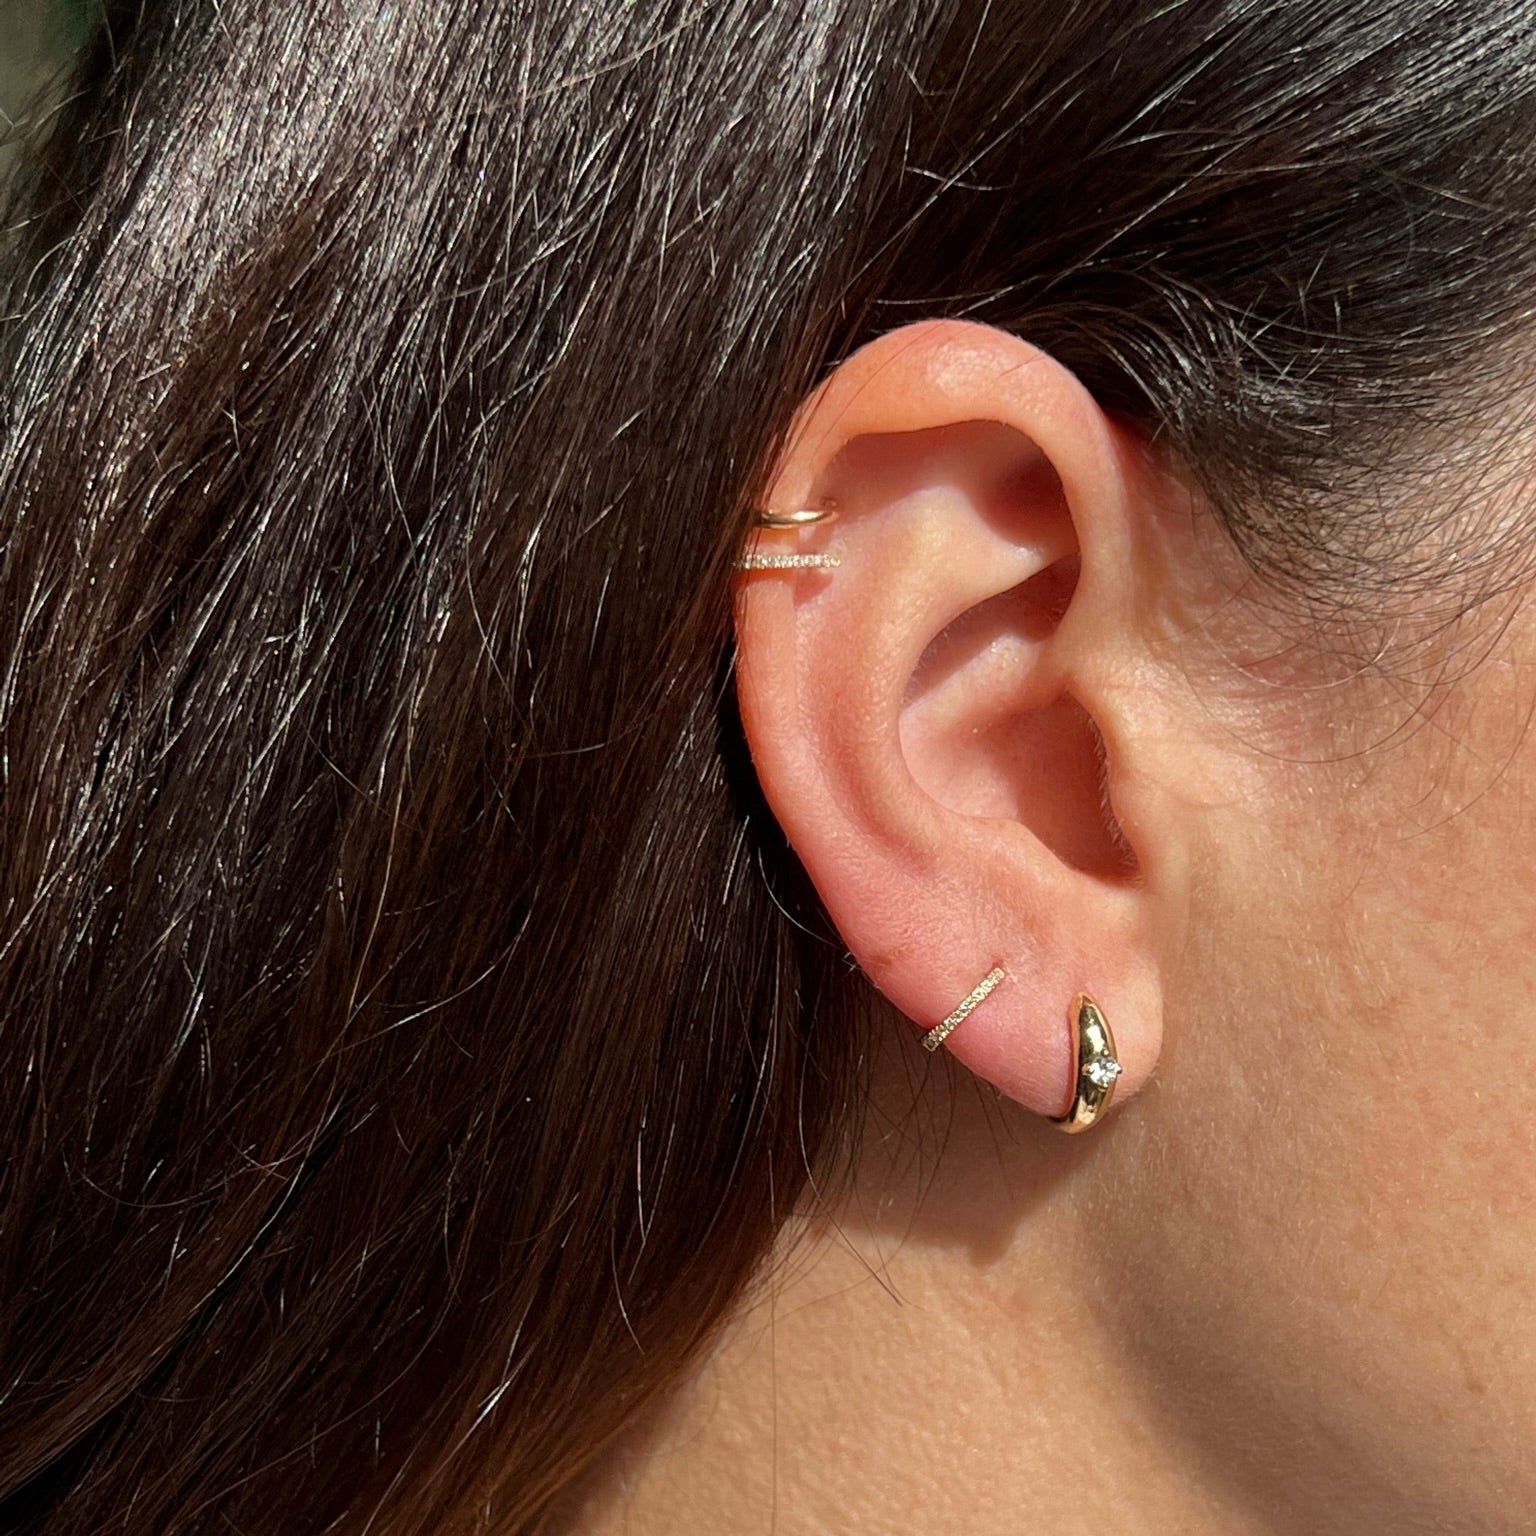 Tiny Helix Piercing Helix Earring Hoop Cartilage Hoop Helix 